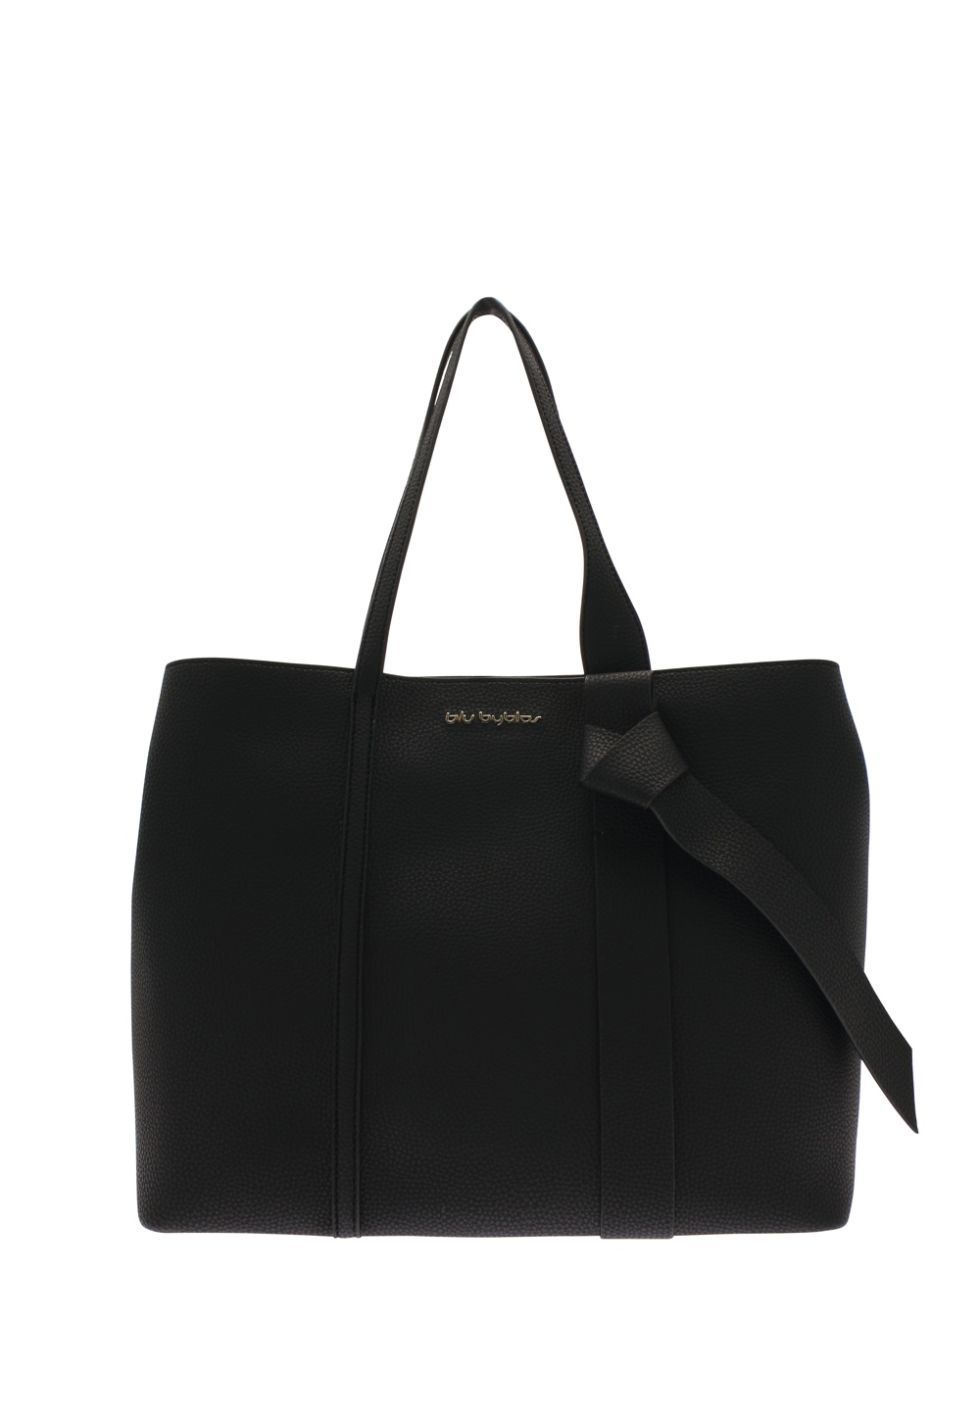 Handbag, Bag, Black, Product, Fashion accessory, Leather, Tote bag, Shoulder bag, Luggage and bags, Rectangle, 